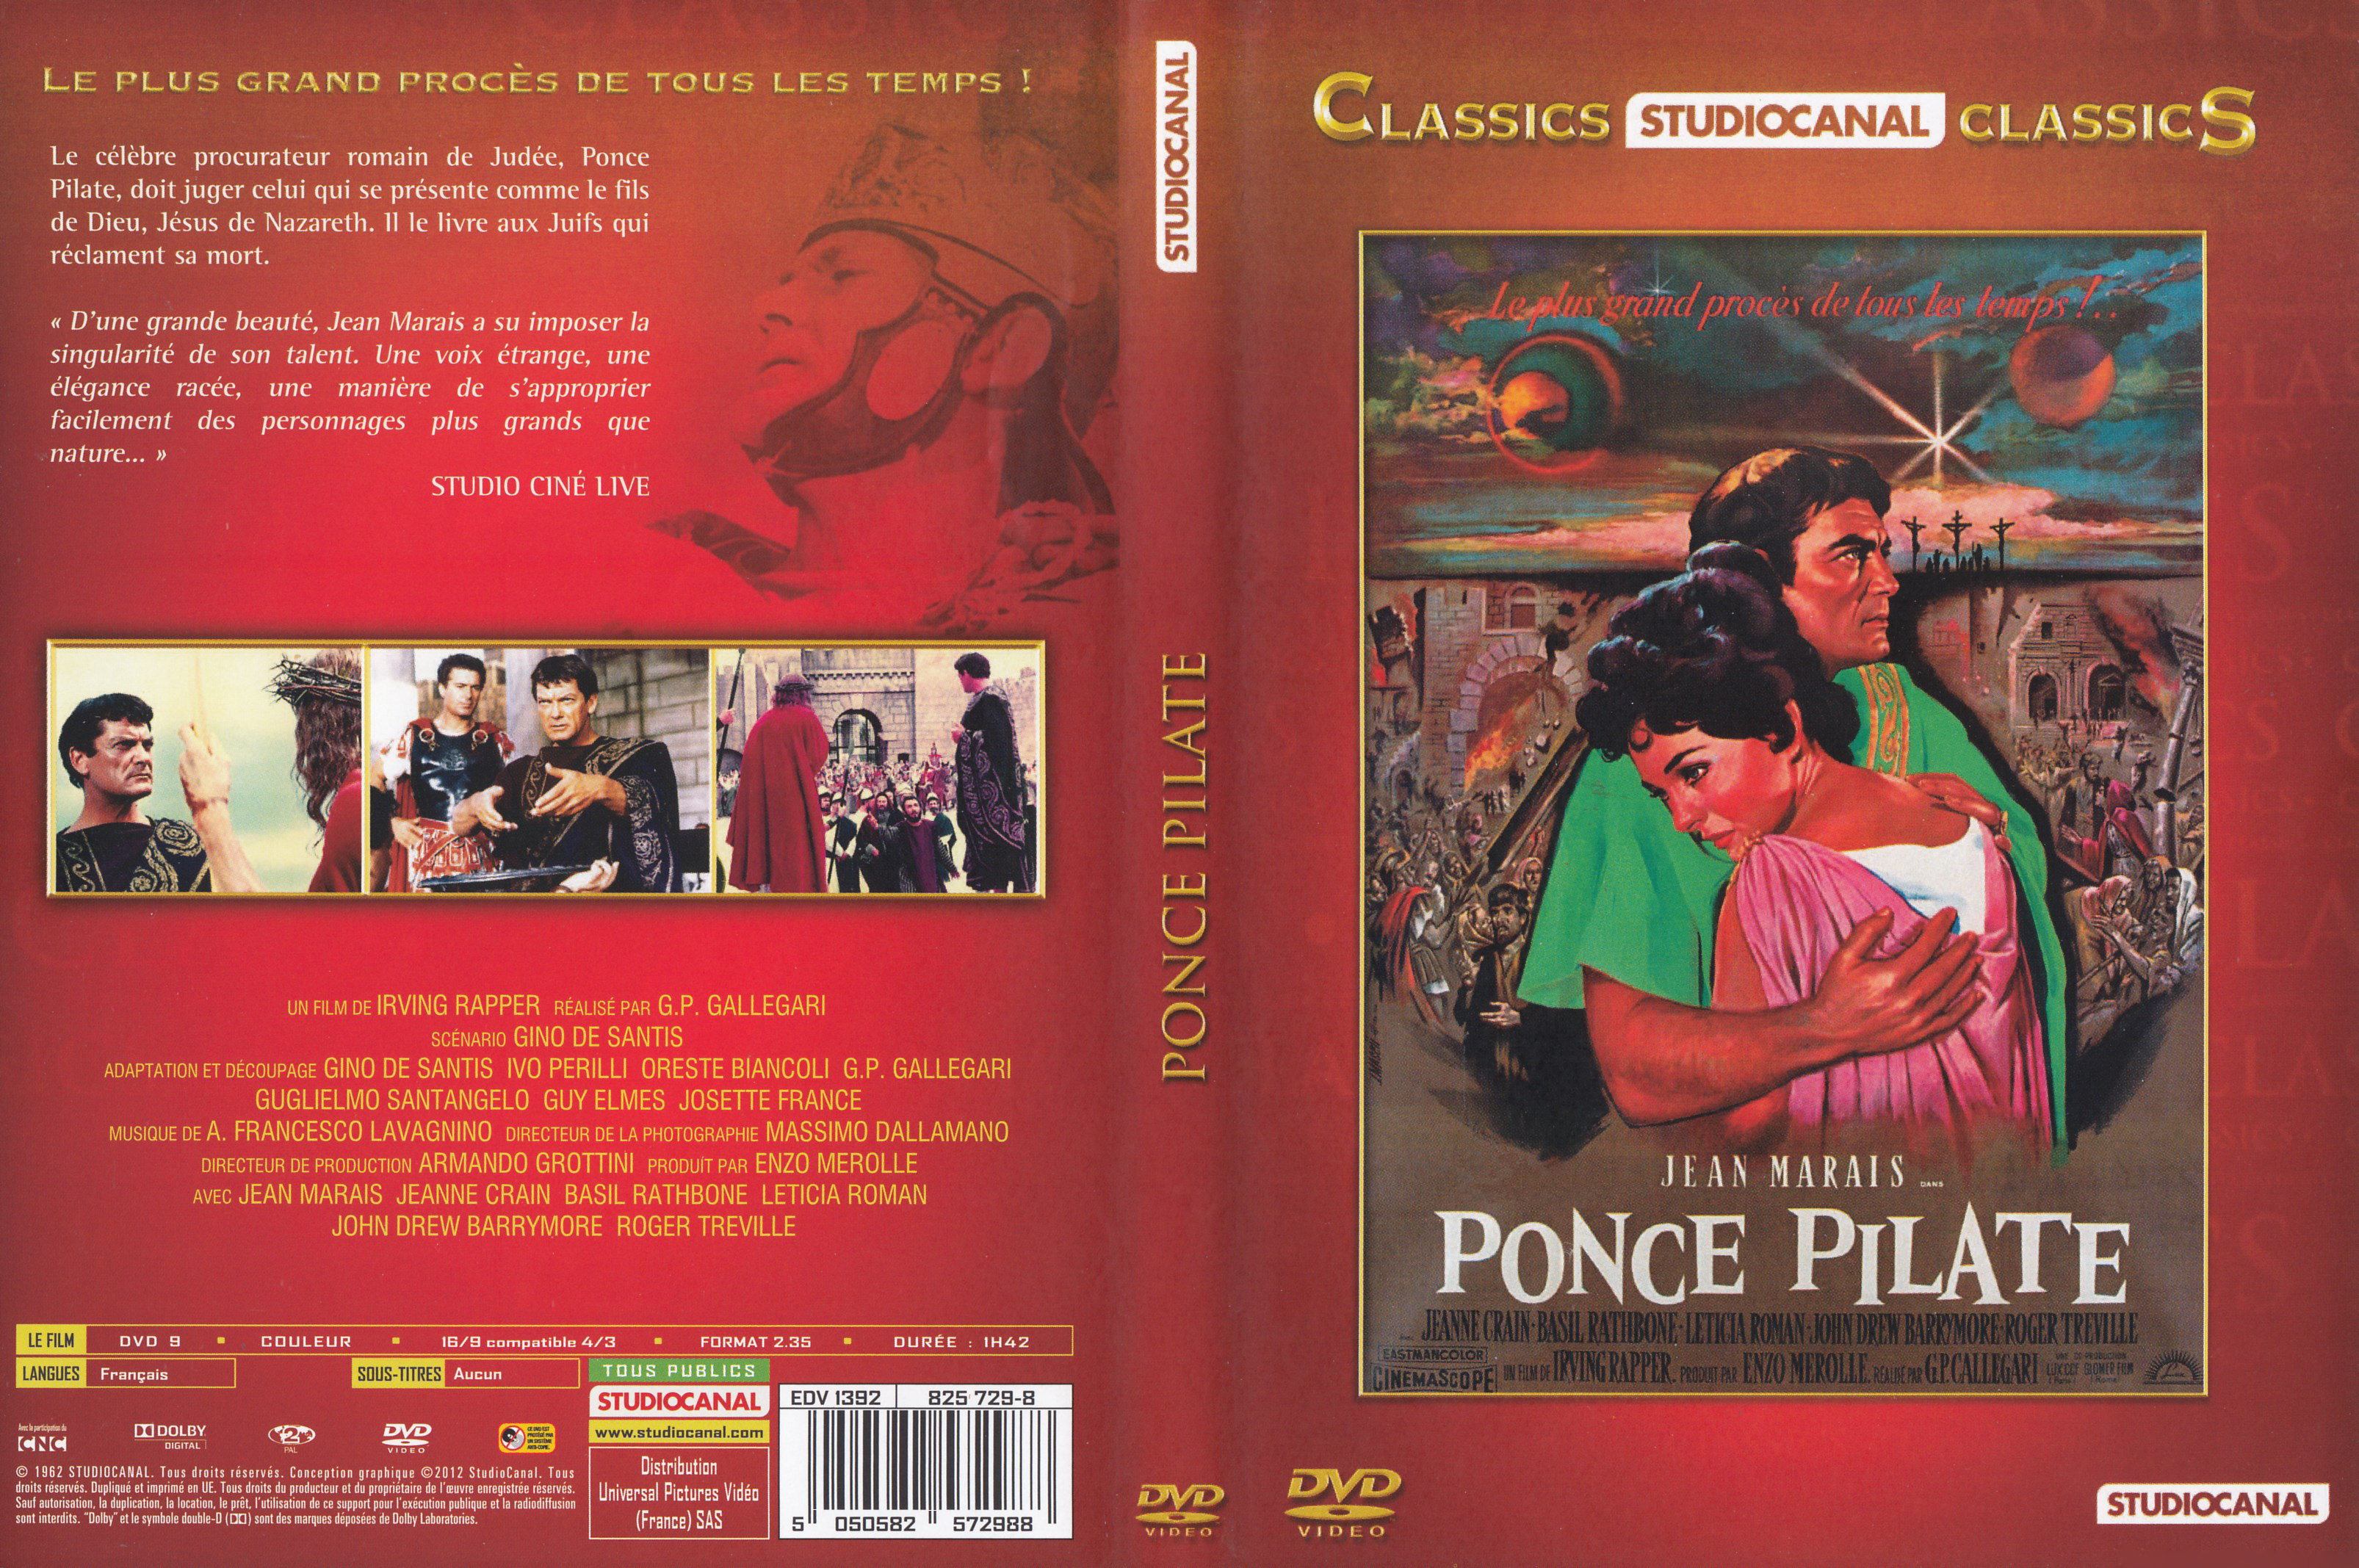 Jaquette DVD Ponce Pilate v2